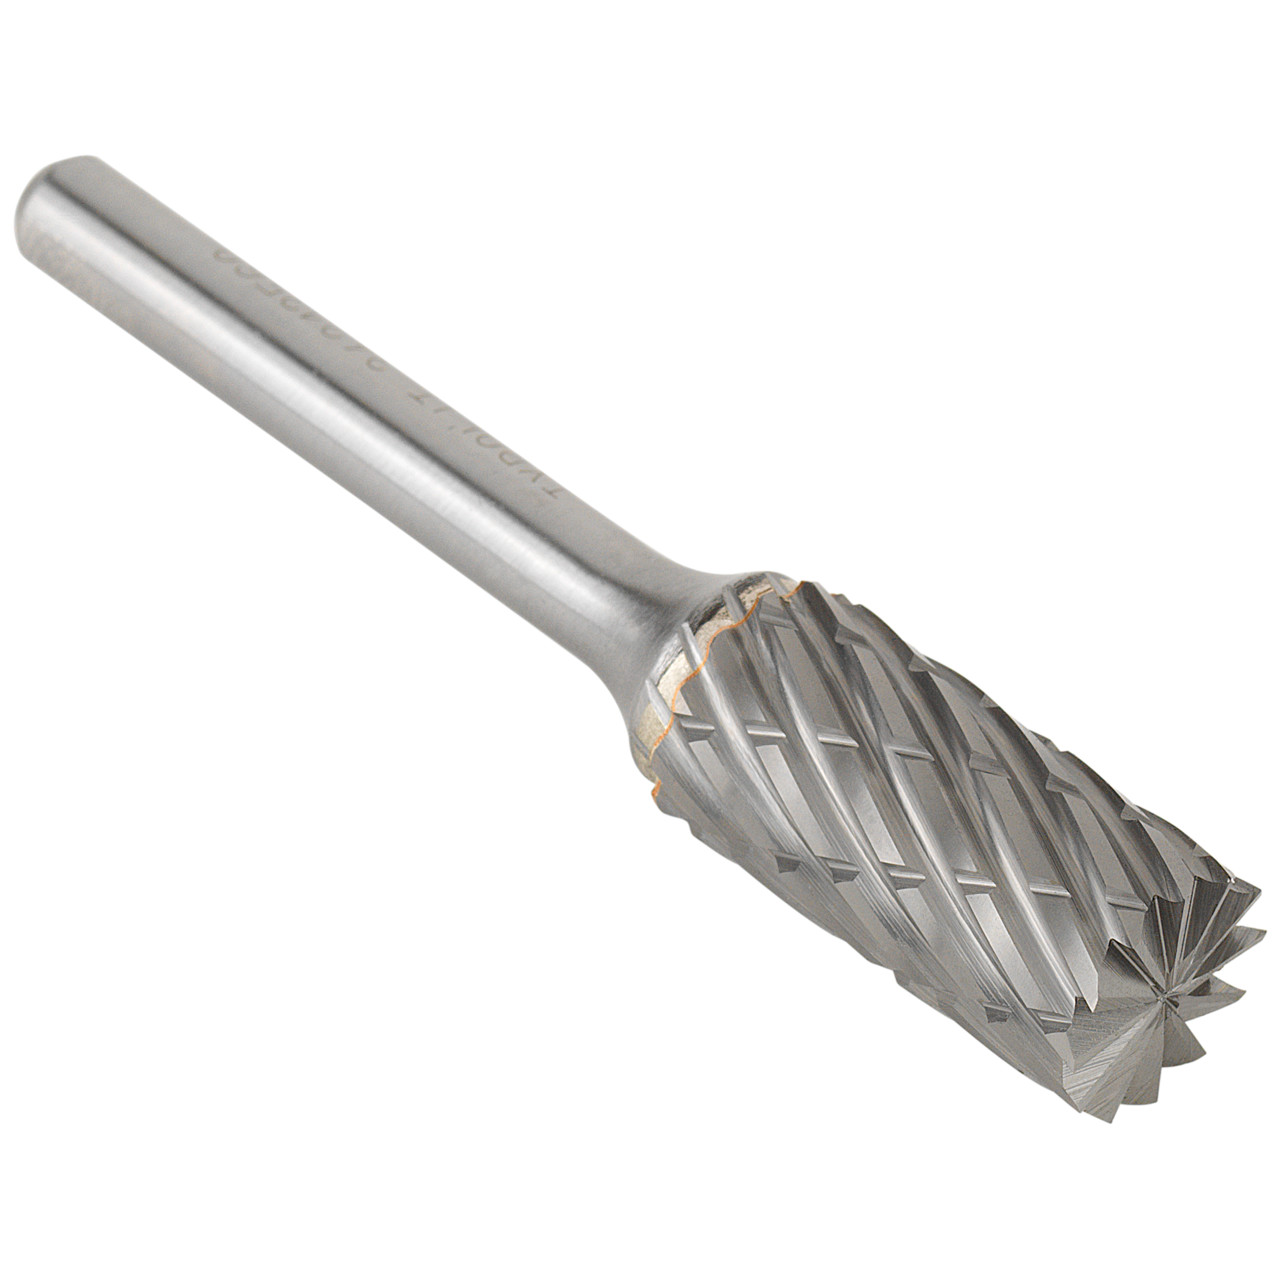 Tyrolit Fresa de metal duro DxT-SxL 8x19-6x64 Para acero, forma: 52ZYAS - cilindro con dentado frontal, Art. 34213558